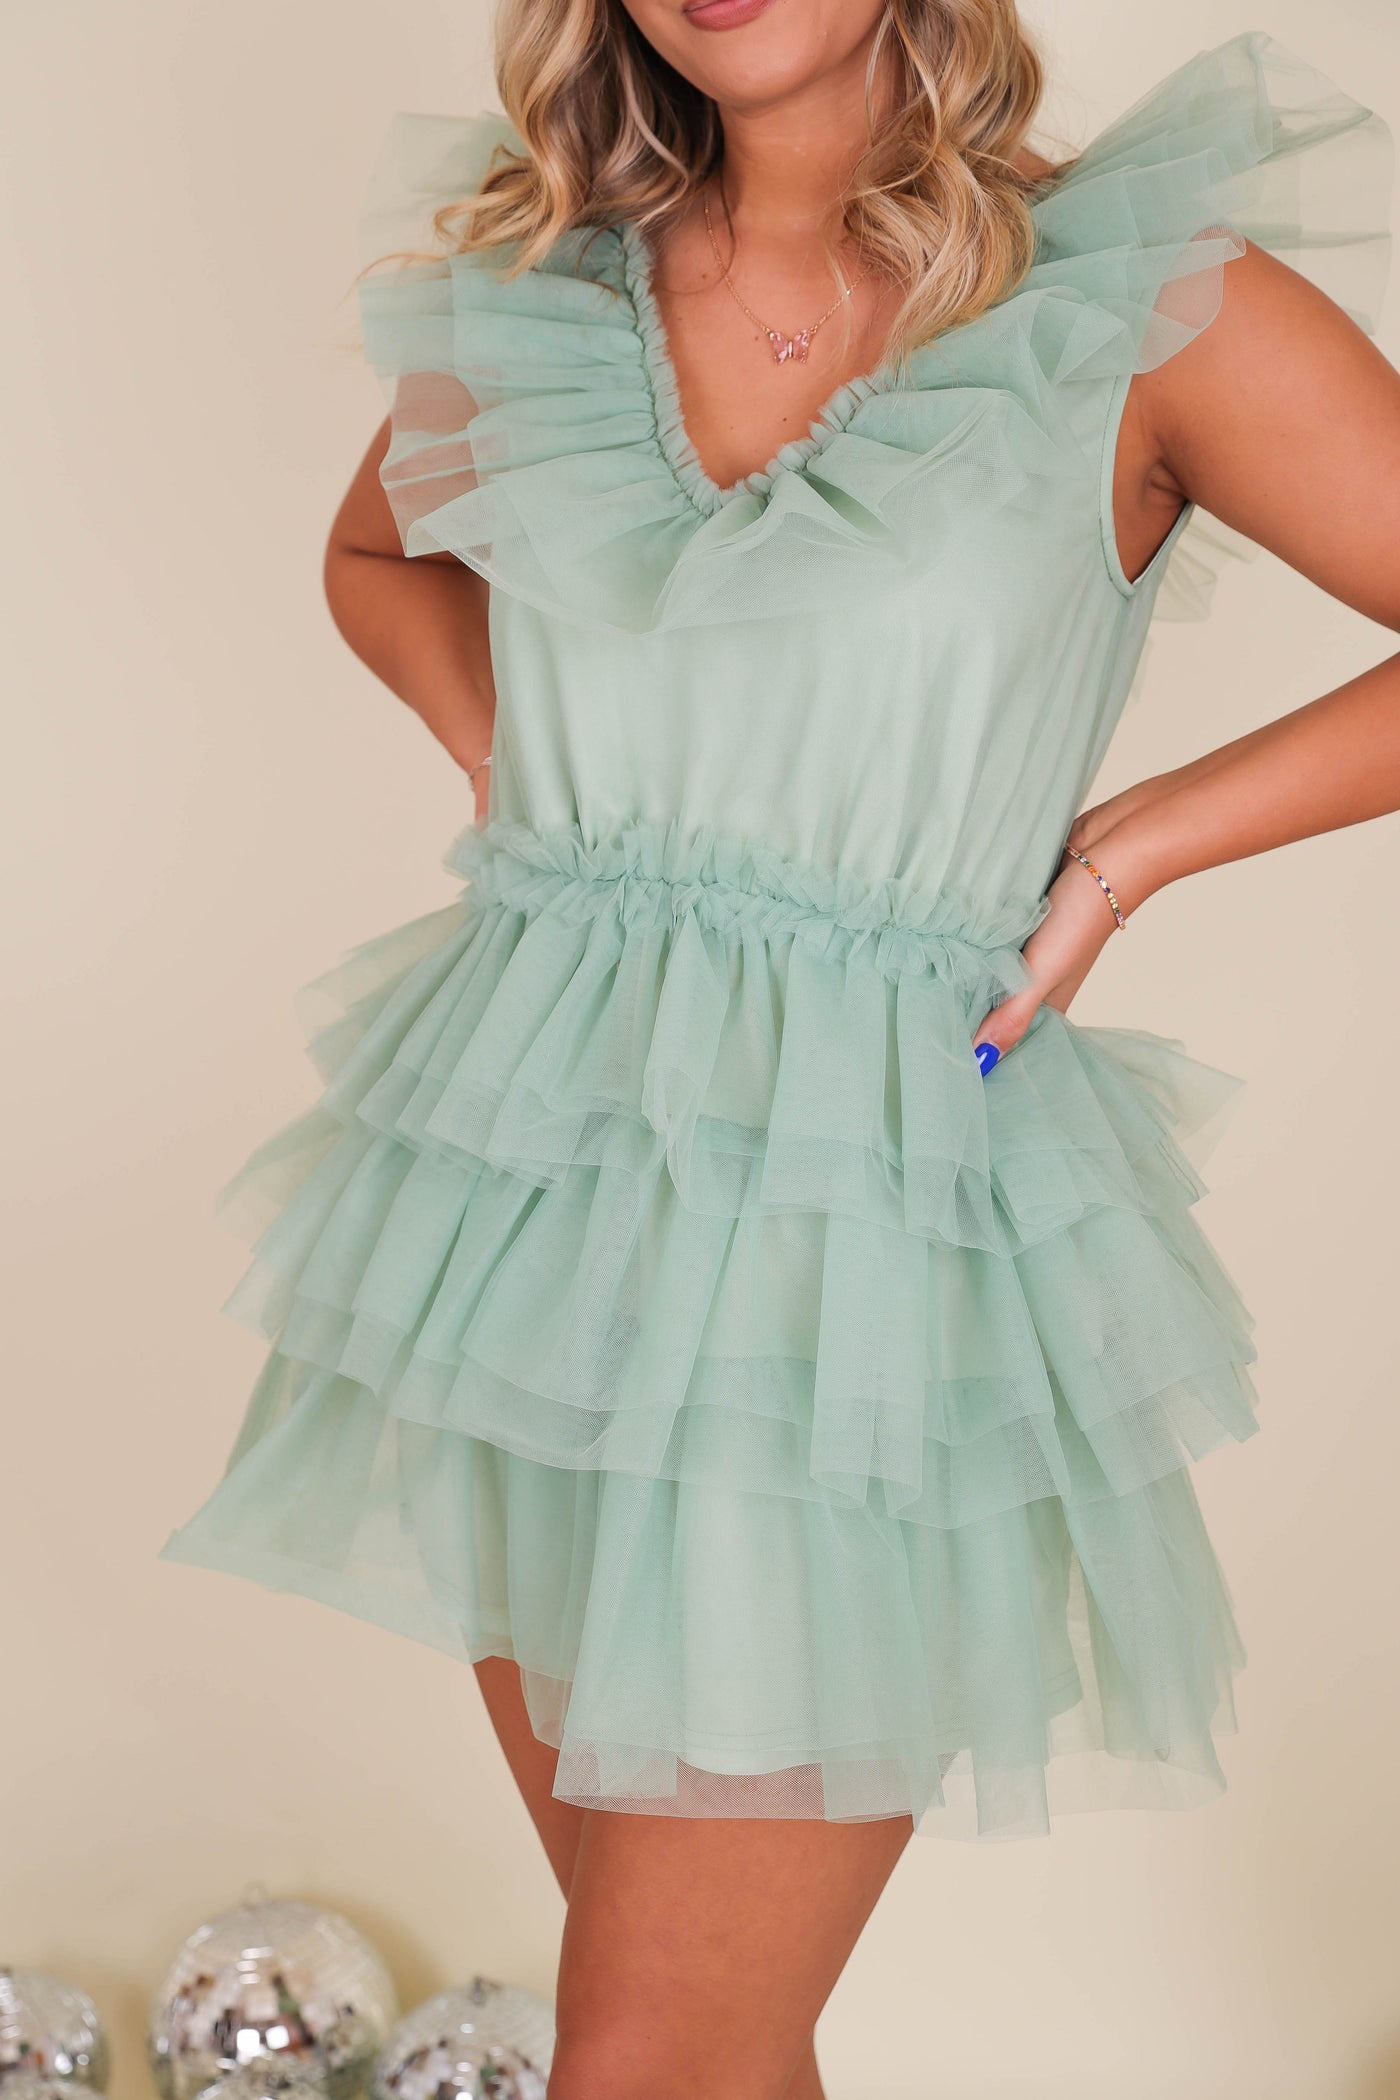 Women's Tulle Mini Dress- Mint Tulle Party Dress- Women's Fun Tulle Dress